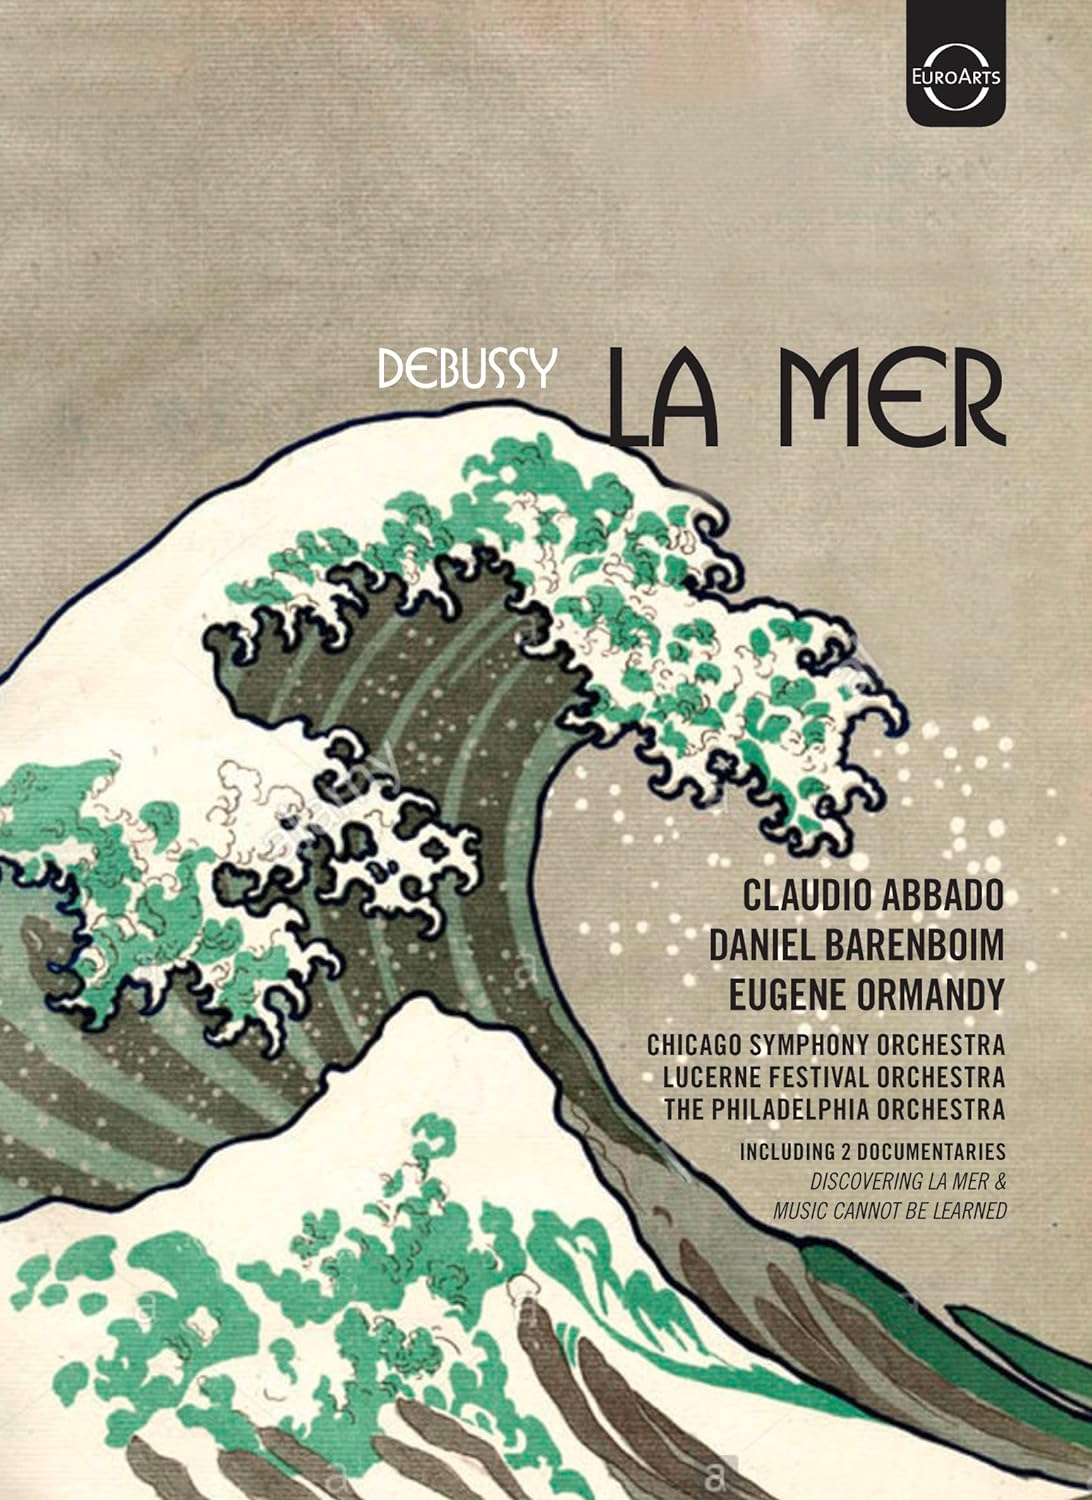 Debussy: La Mer (DVD) | Claudio Abbado, Daniel Barenboim, Eugene Ormandy, Chicago Symphony Orchestra, Lucerne Festival Orchestra